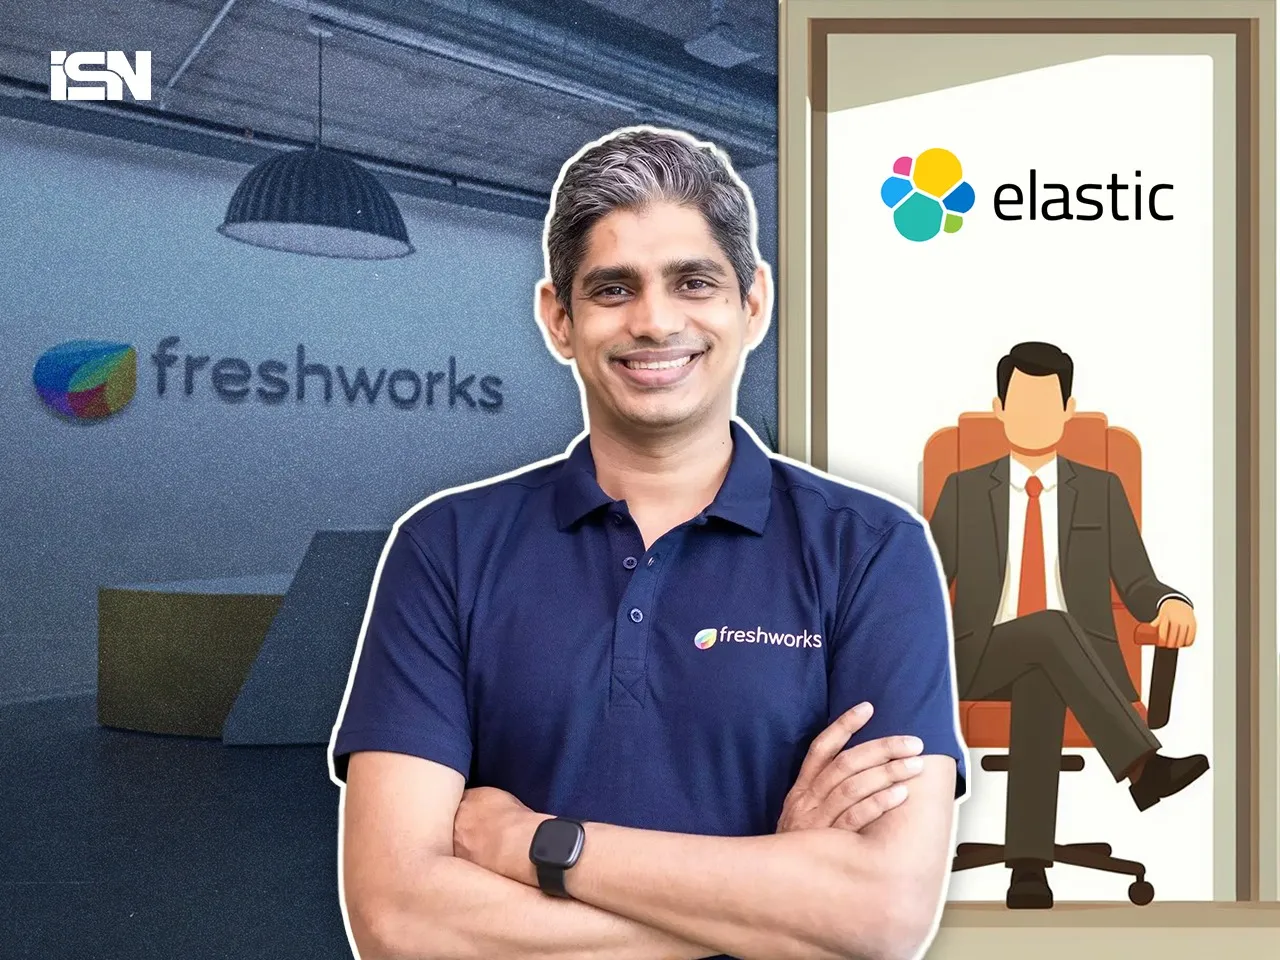 Freshworks India head Karthik Rajaram quits, Joins Elastic India as General Manager